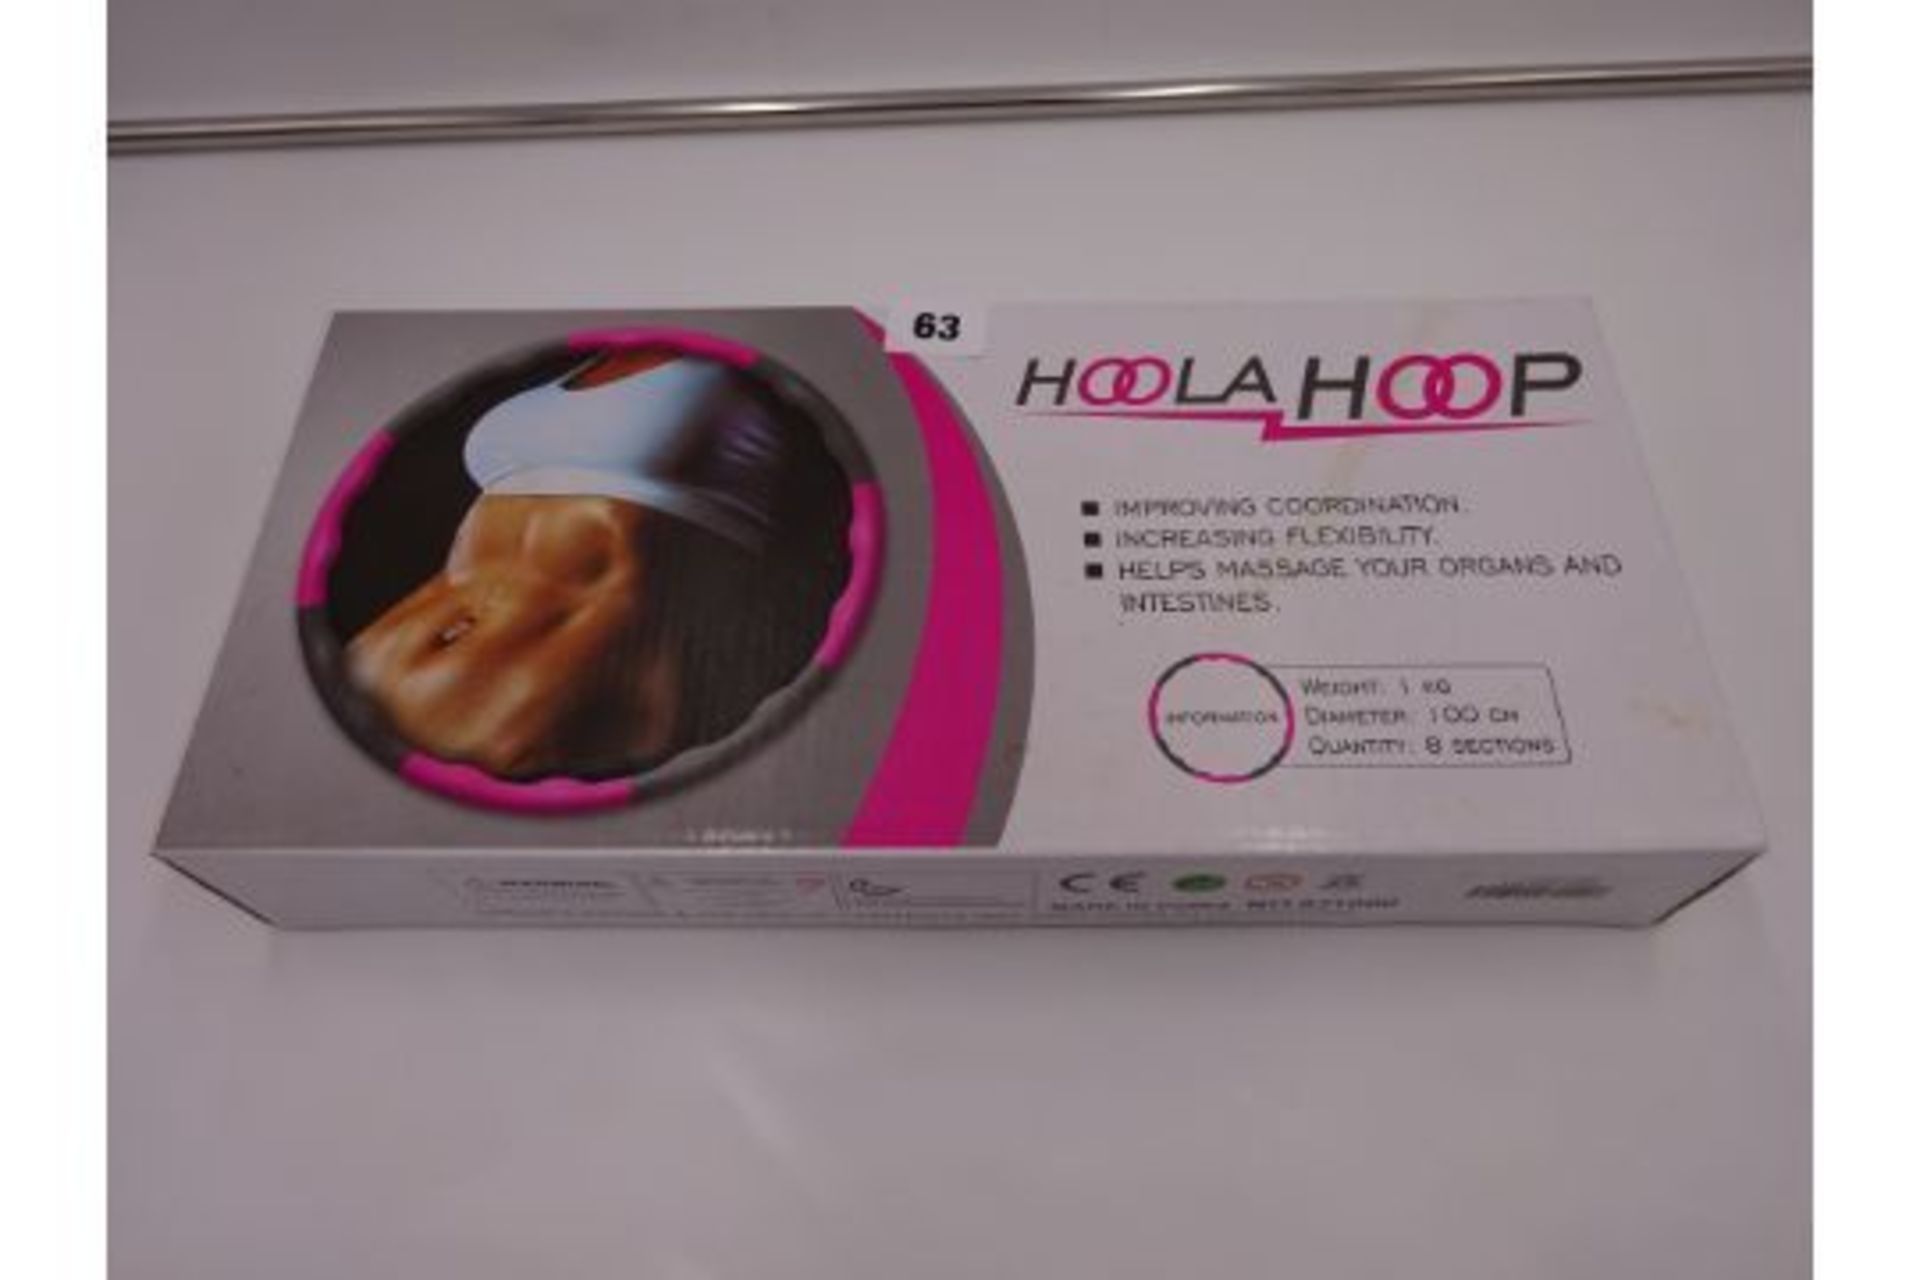 NEW HULA HOOPNew - Hoola hoop fitness tool, diameter 100cm comes in 8 sections